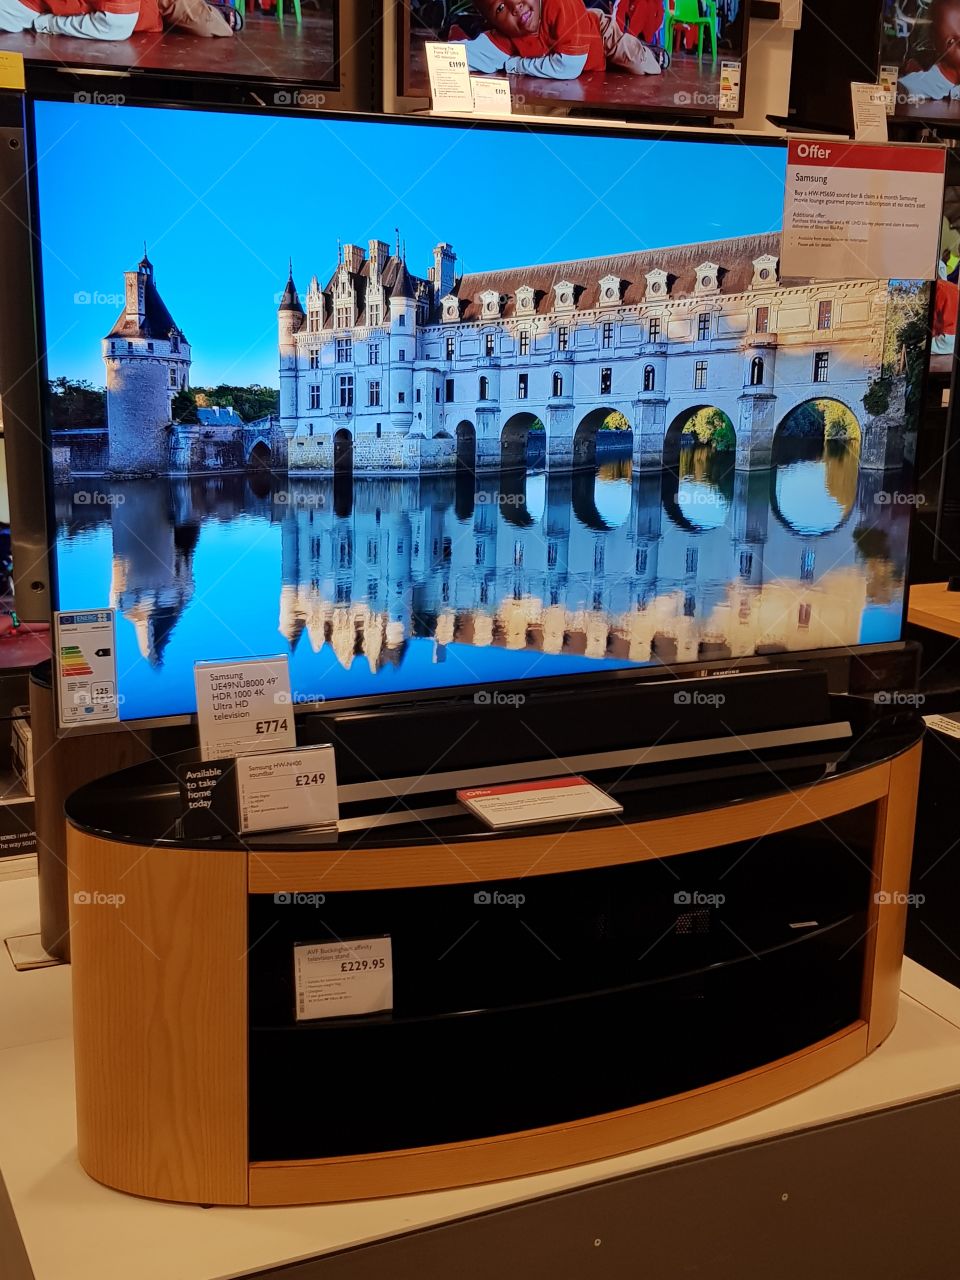 Samsung Premium 4K Ultra High Definition TV with soundbar on wood and glass TV stand with soundbar